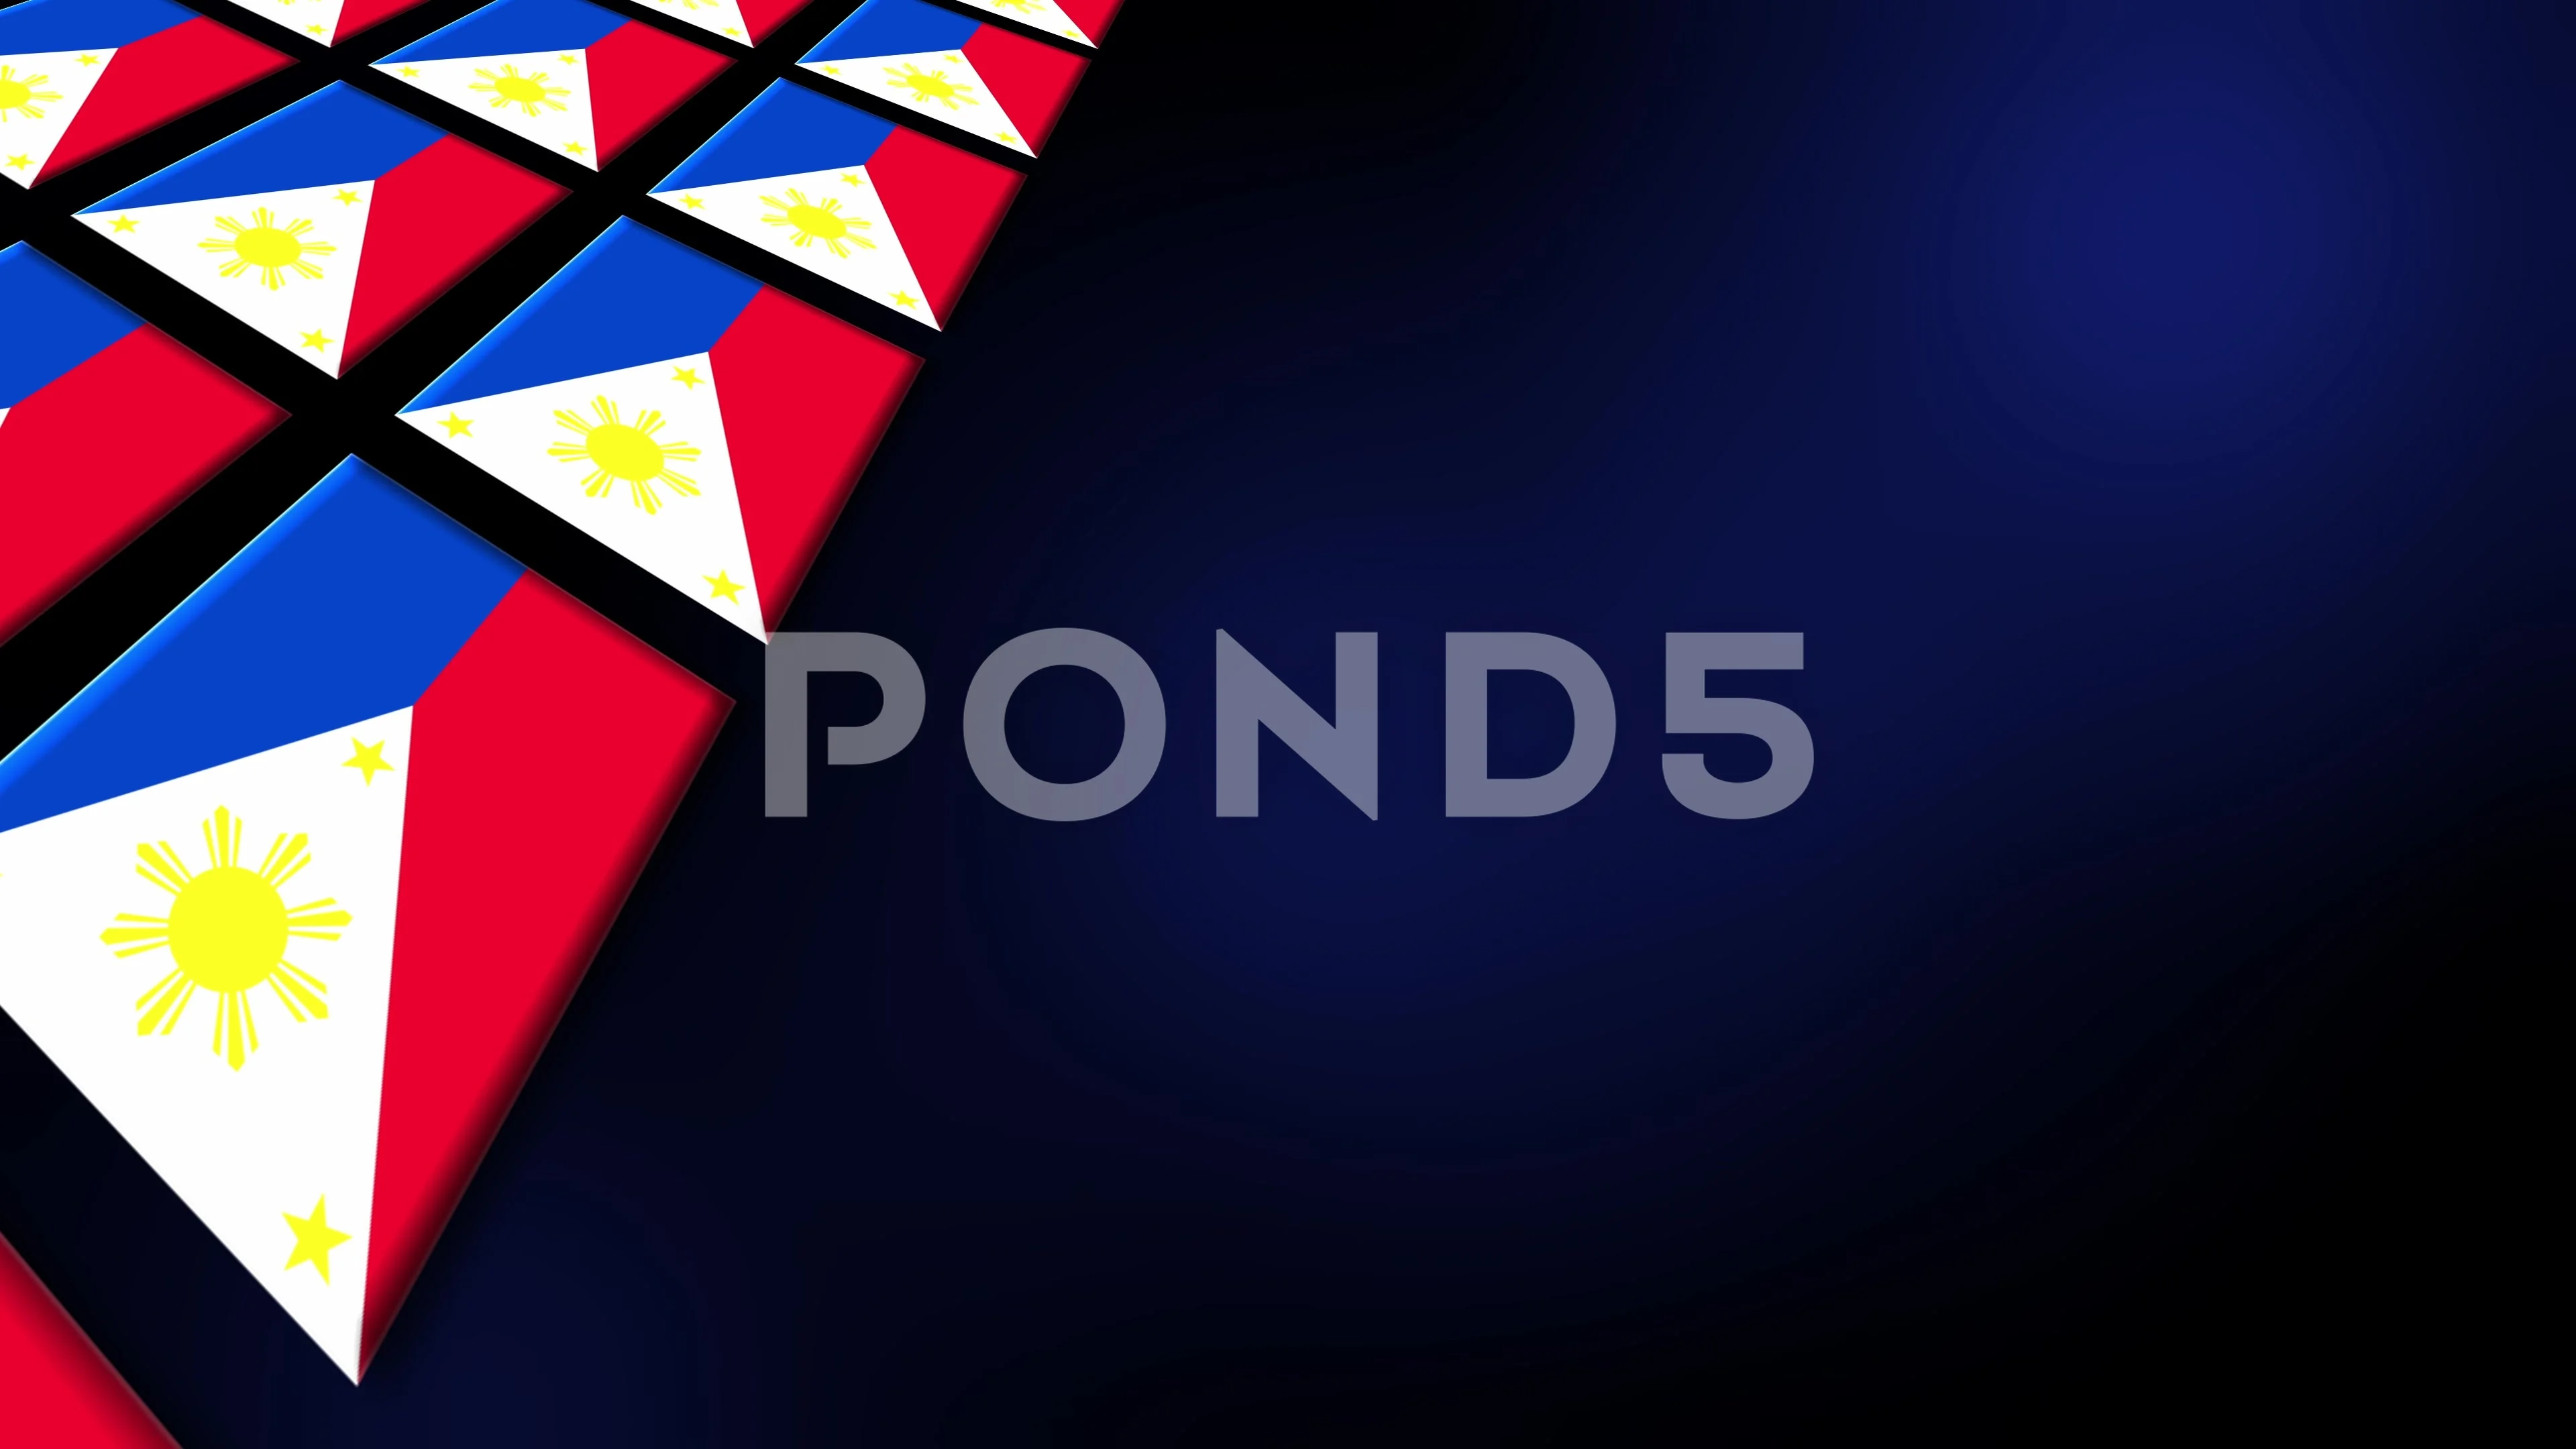 philippine flag wallpaper